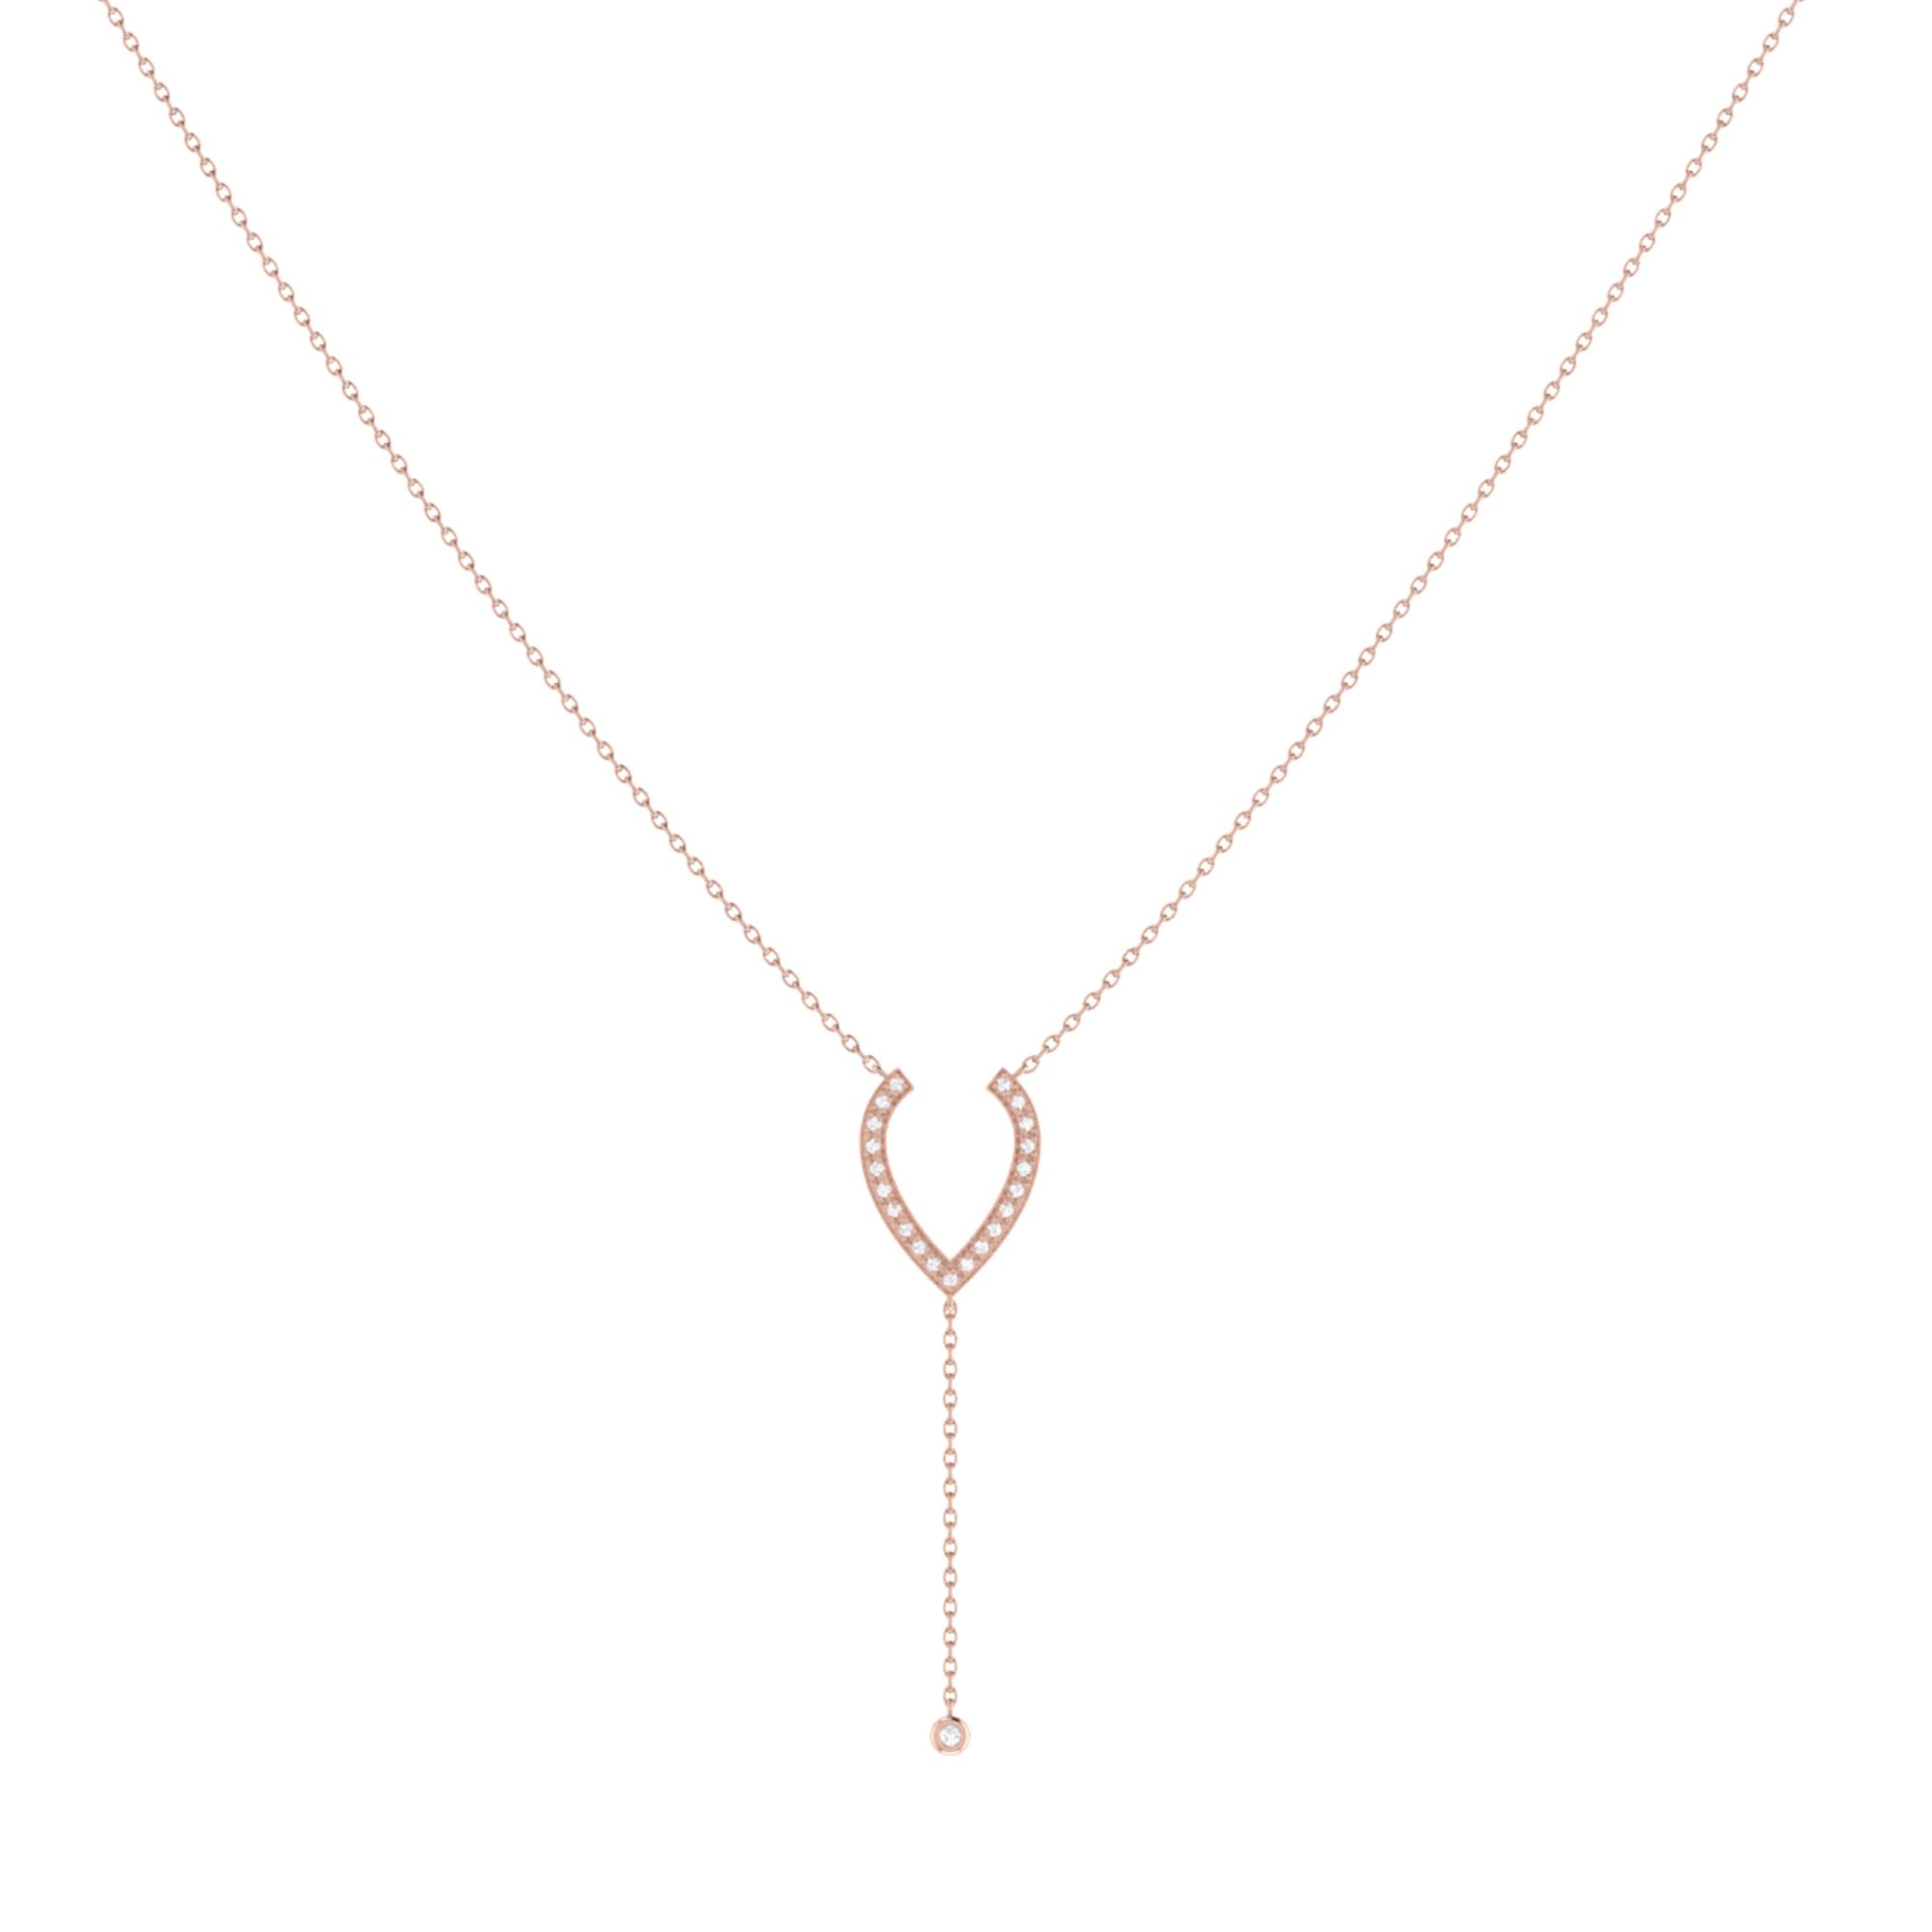 Adjustable Diamond Lariat Necklace in 14K Rose Gold with Drizzle Drip Teardrop Motif Bijou Her